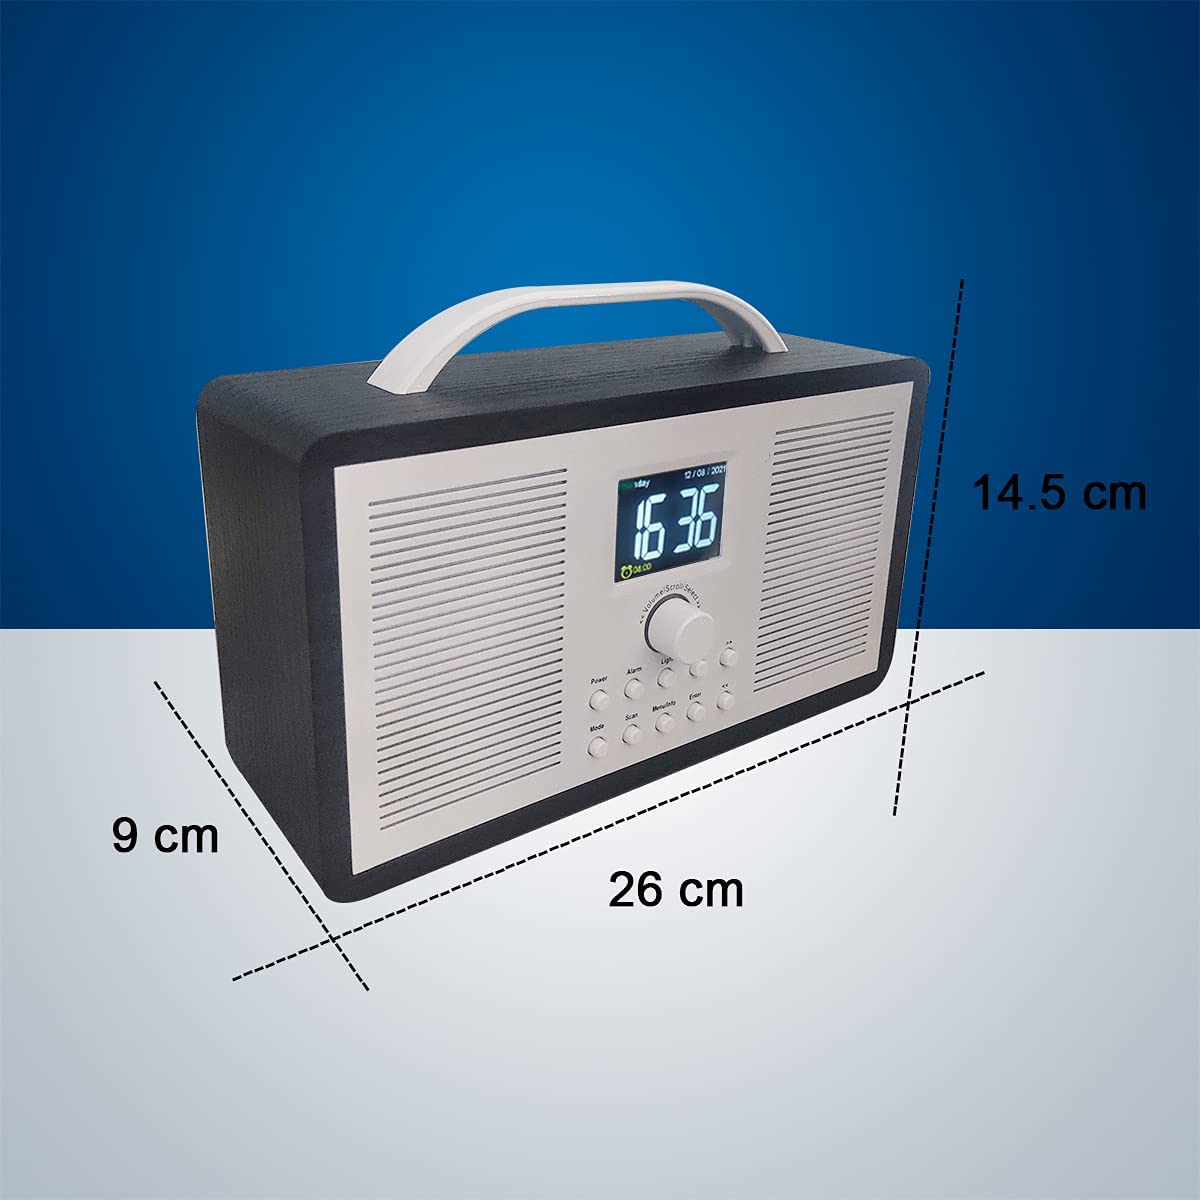 AOVOTO FM/DAB+ Bluetooth Aux In multifunctional Radio, DAB radio with Alarm clock & Sleep timer & 2.4 TFT Color Display (DAB_TB_03)